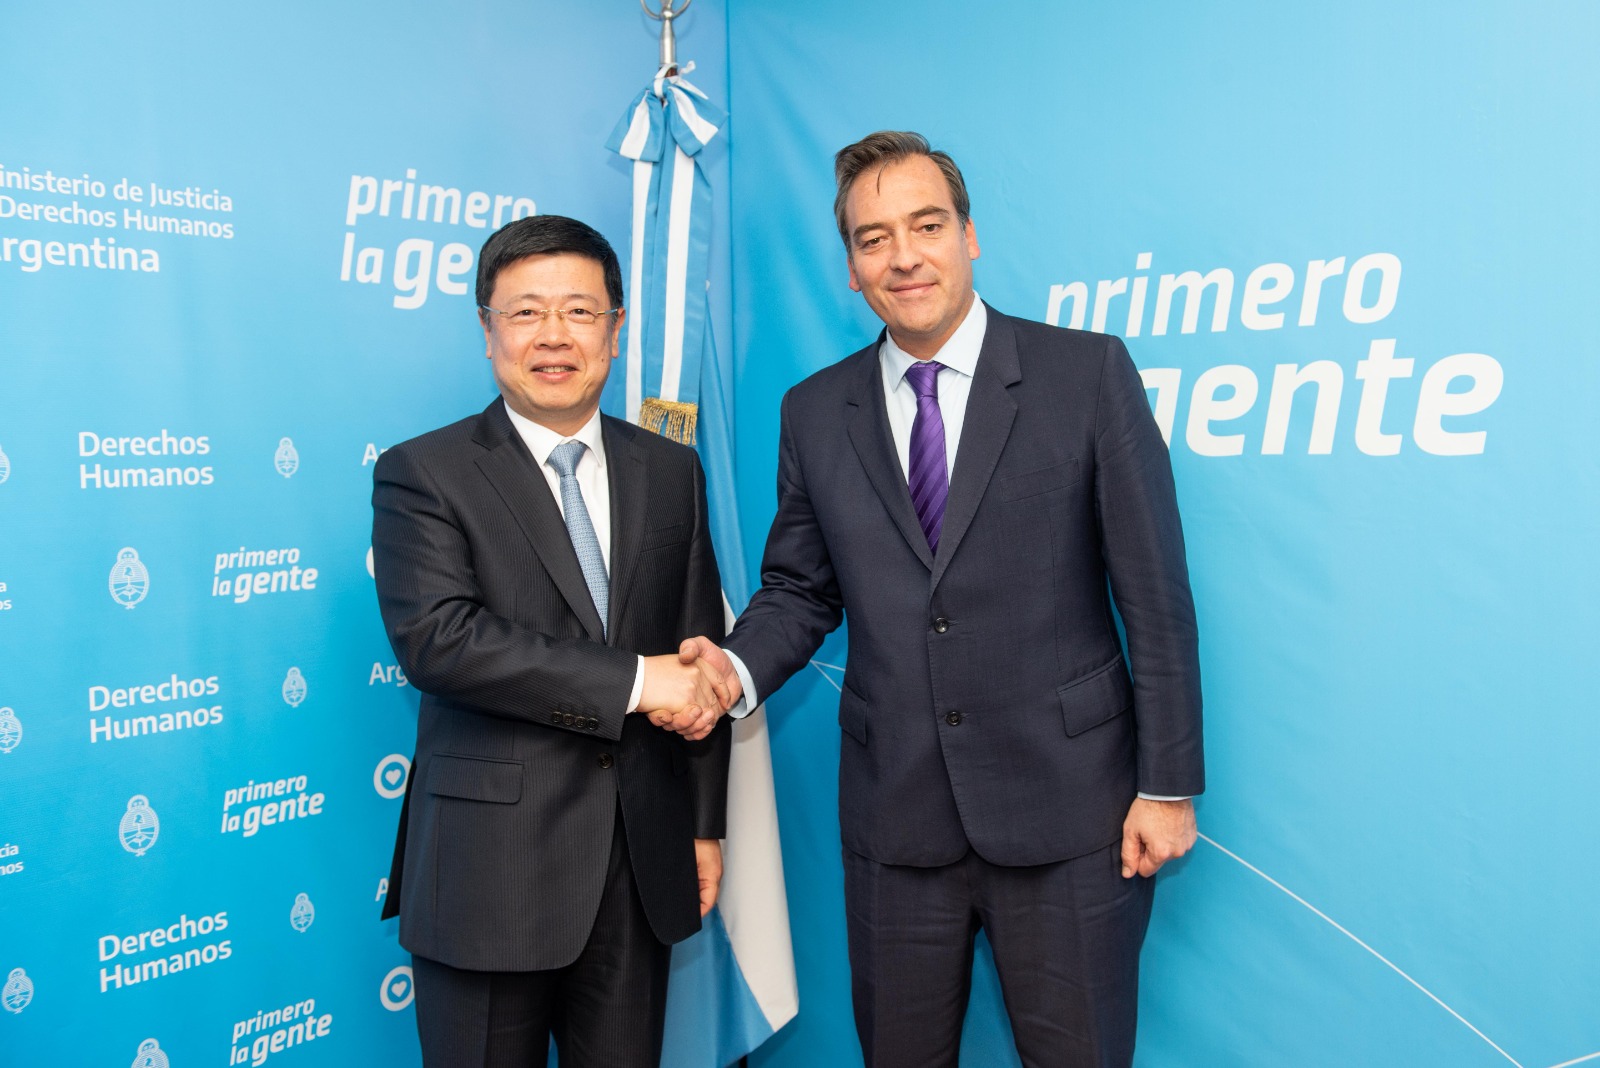 El ministro Soria se reunió con el embajador de la República Popular de China, Zou Xiaoli